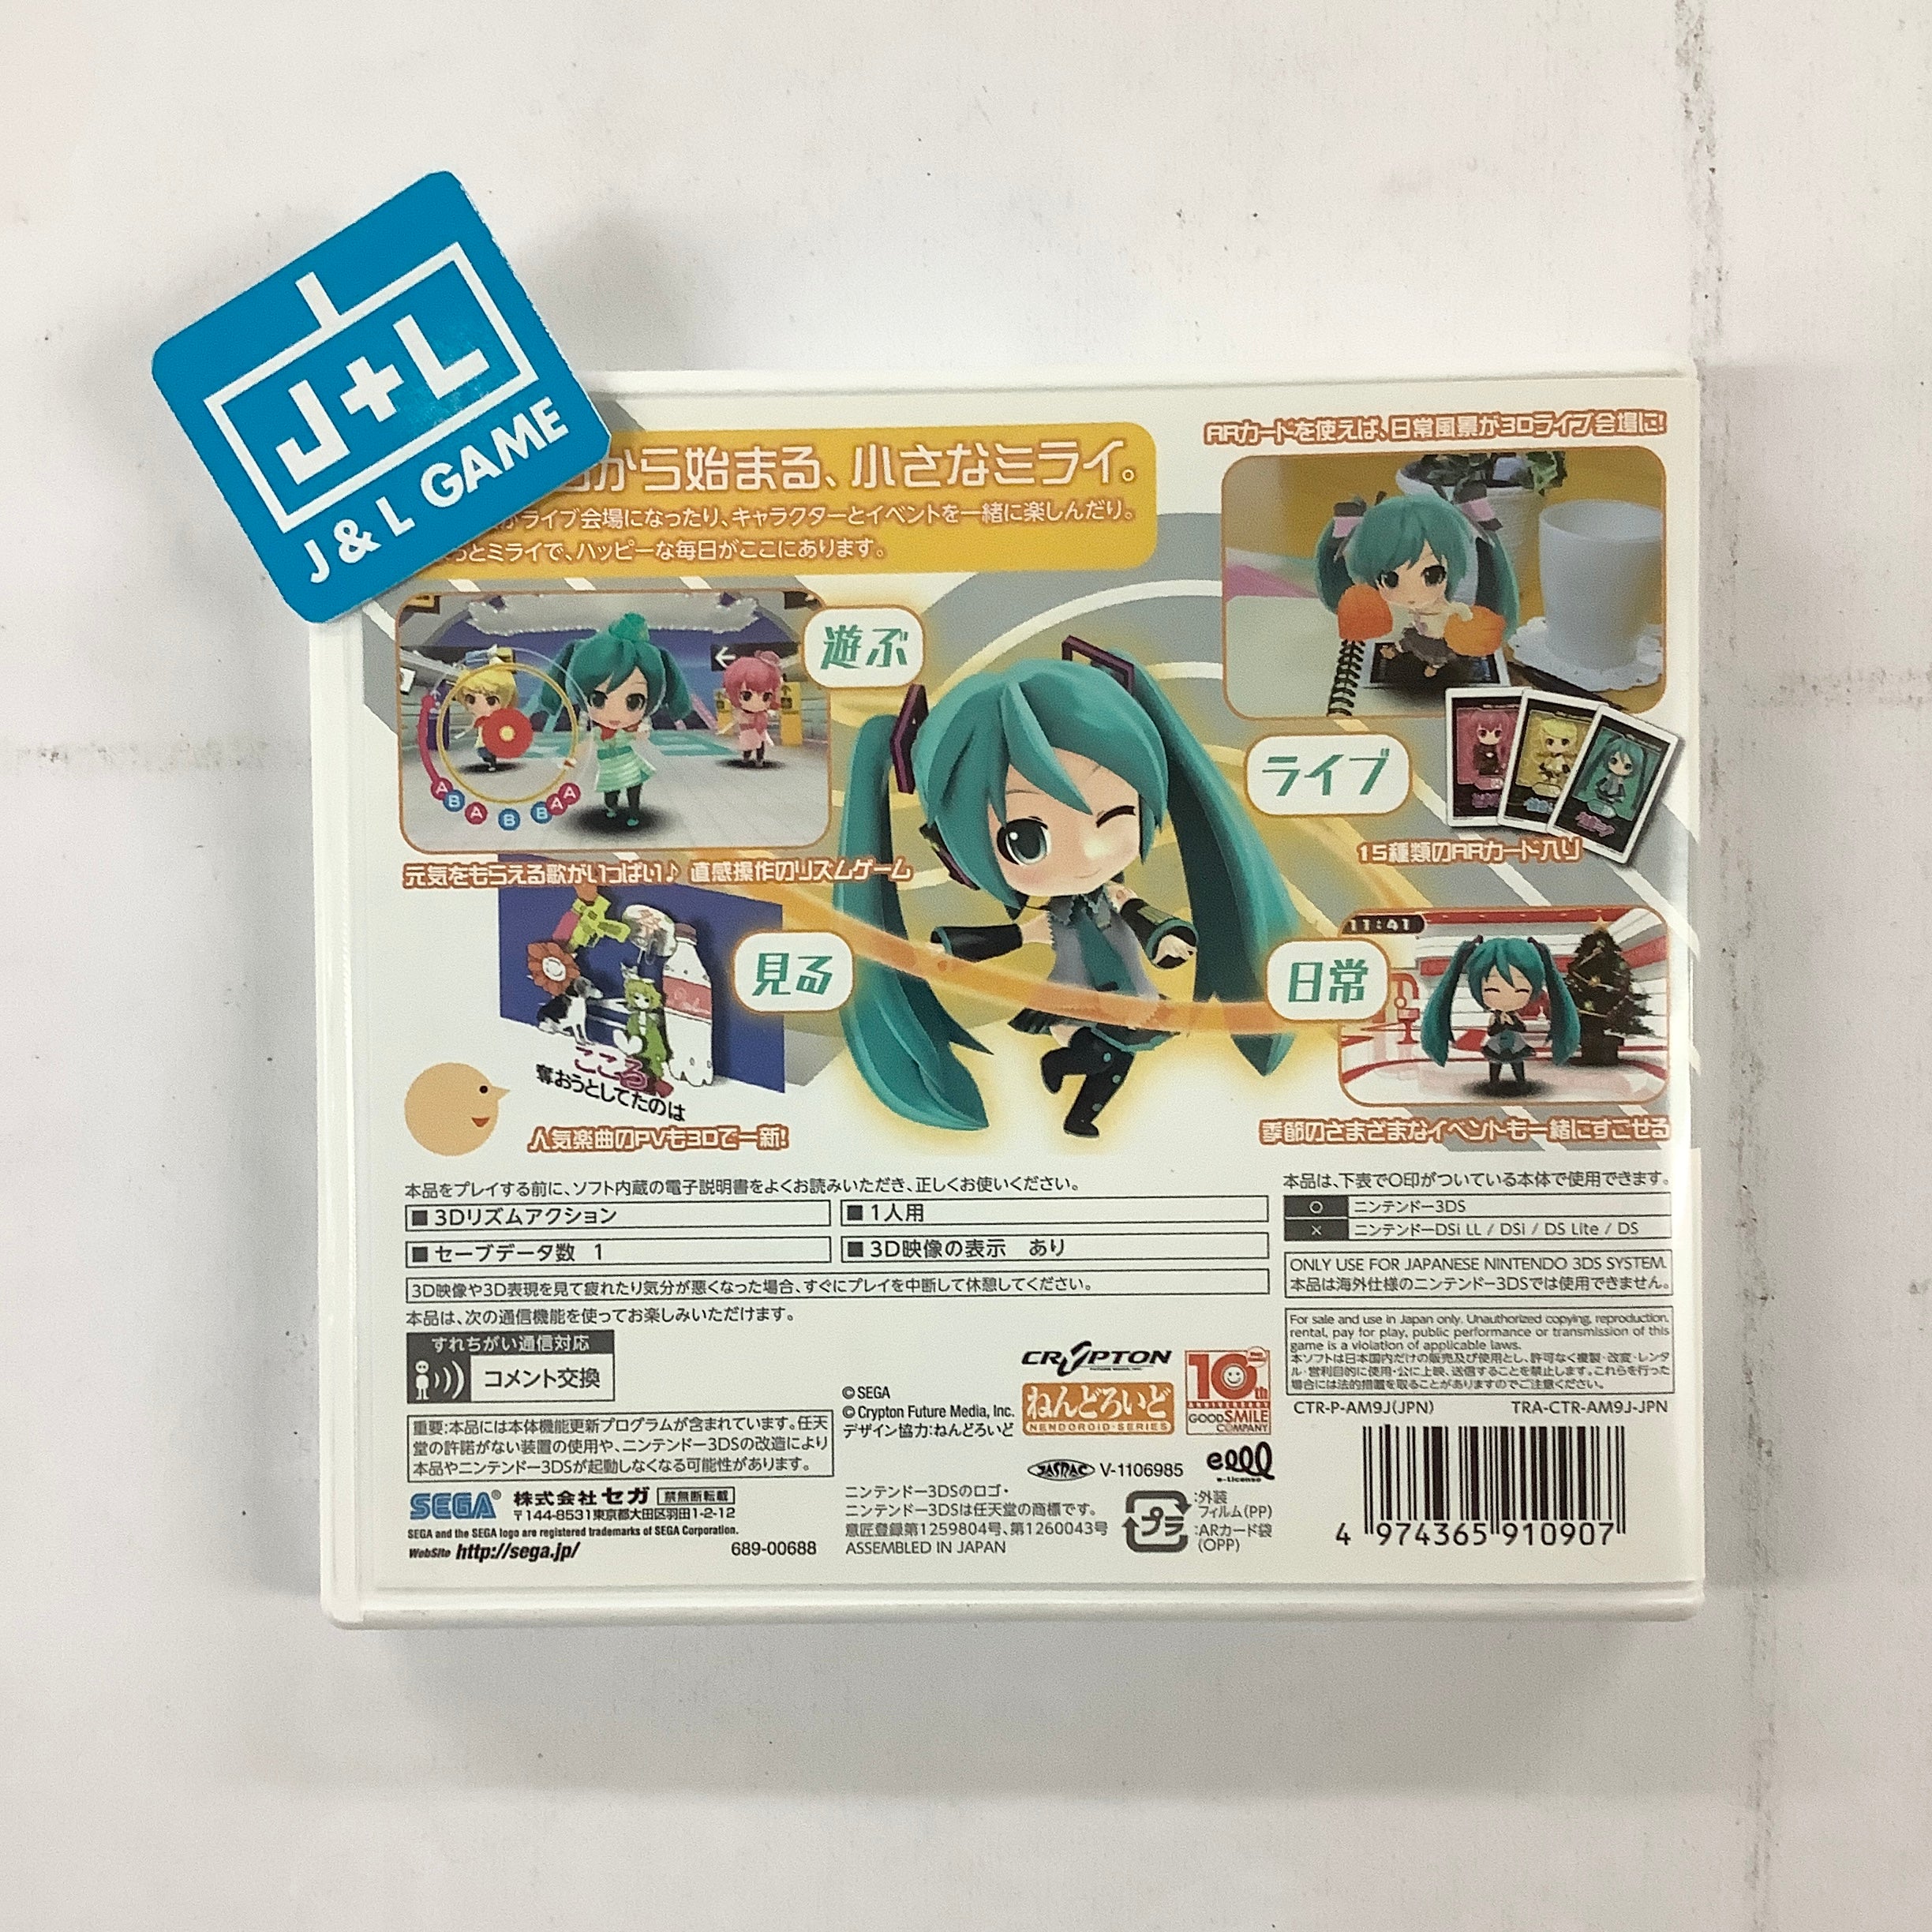 Hatsune Miku and Future Stars: Project Mirai - Nintendo 3DS [Pre-Owned] (Japanese Import) Video Games Sega   